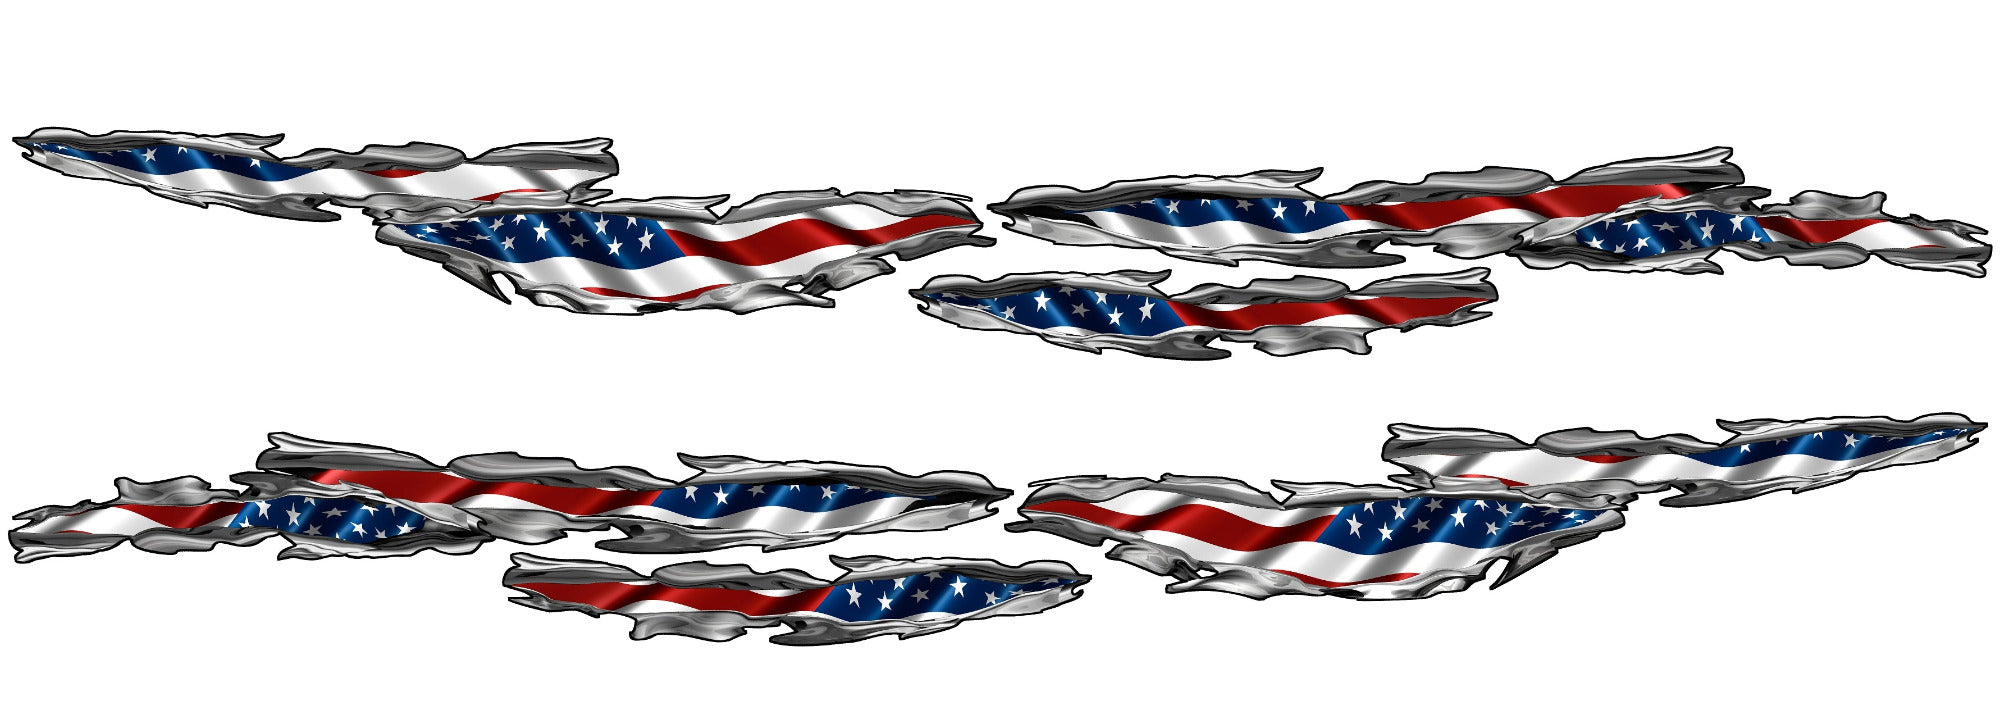 American flag teard Vehicle decals kit